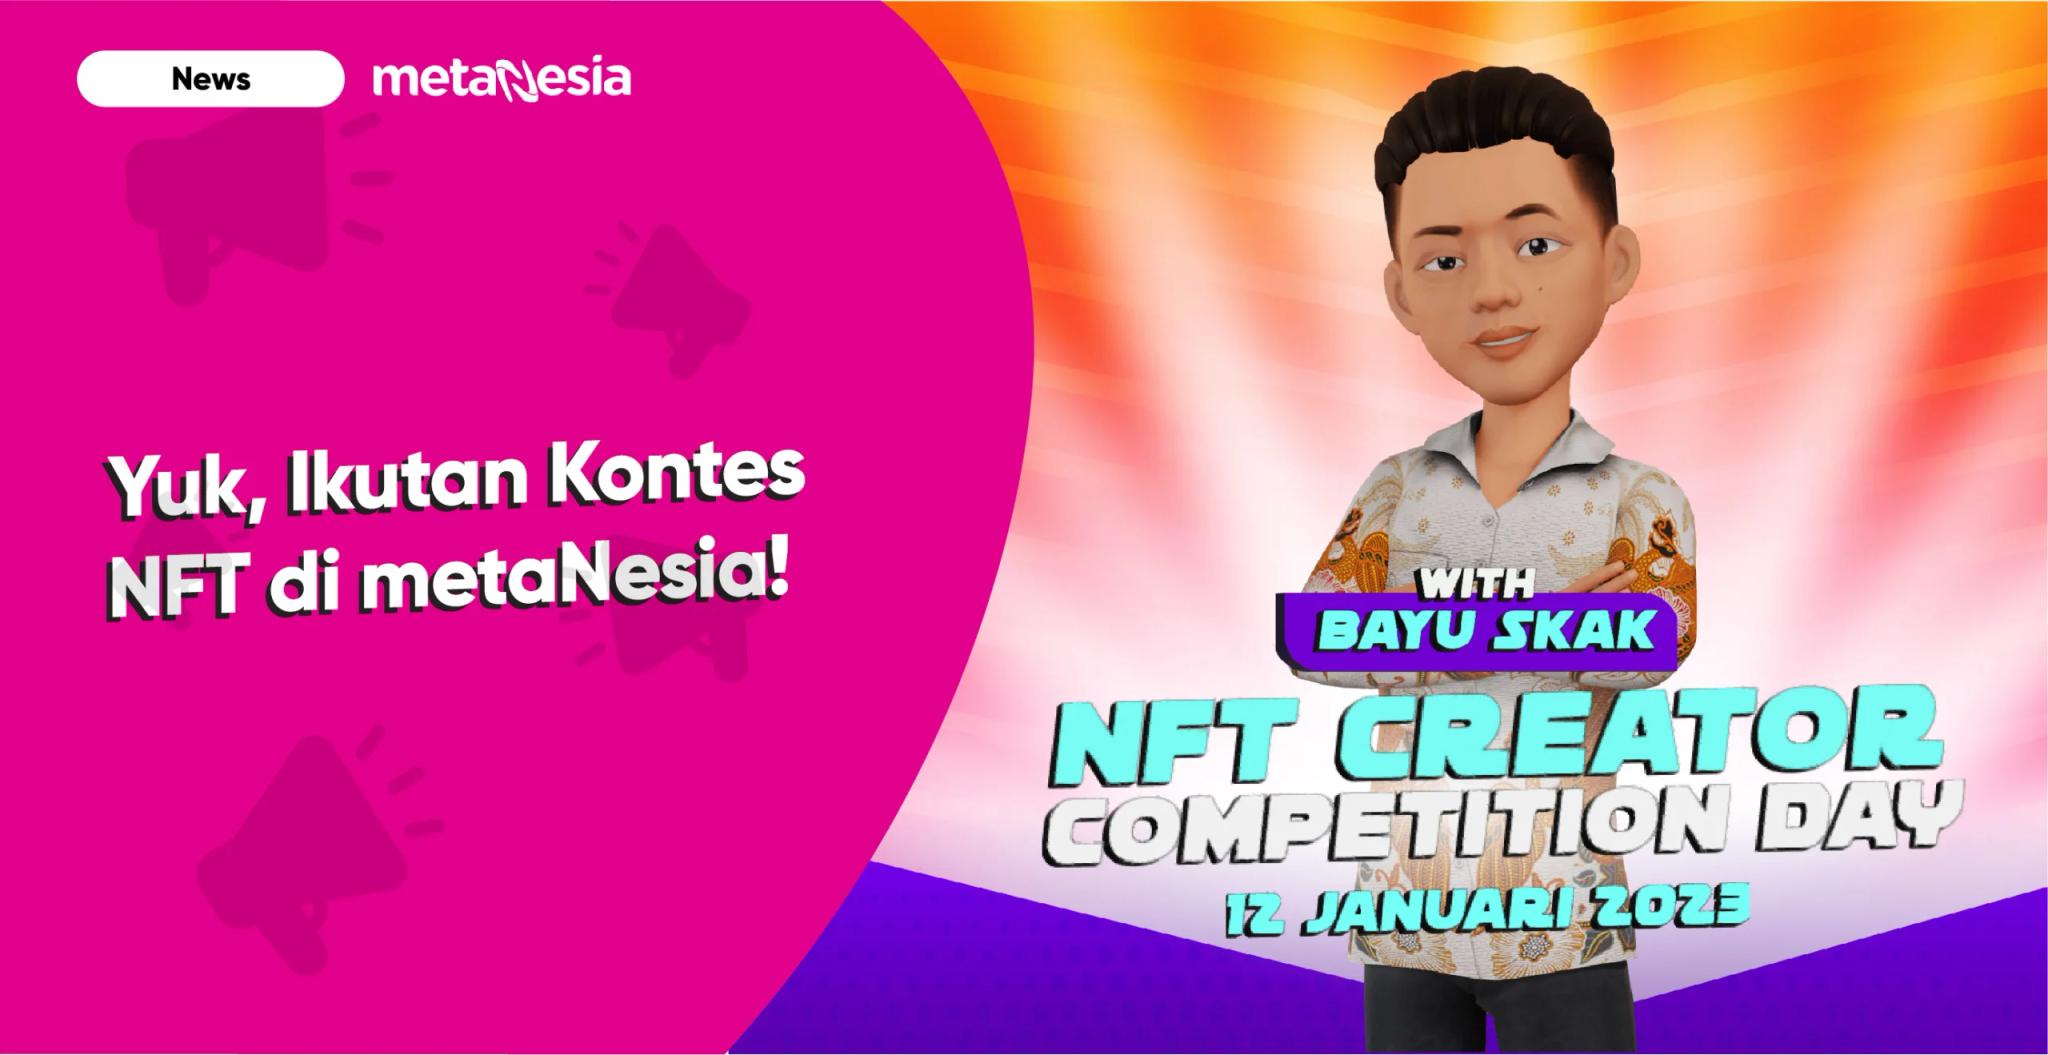 Yuk, Ikutan Kontes NFT metaNesia by Telkom Indonesia!